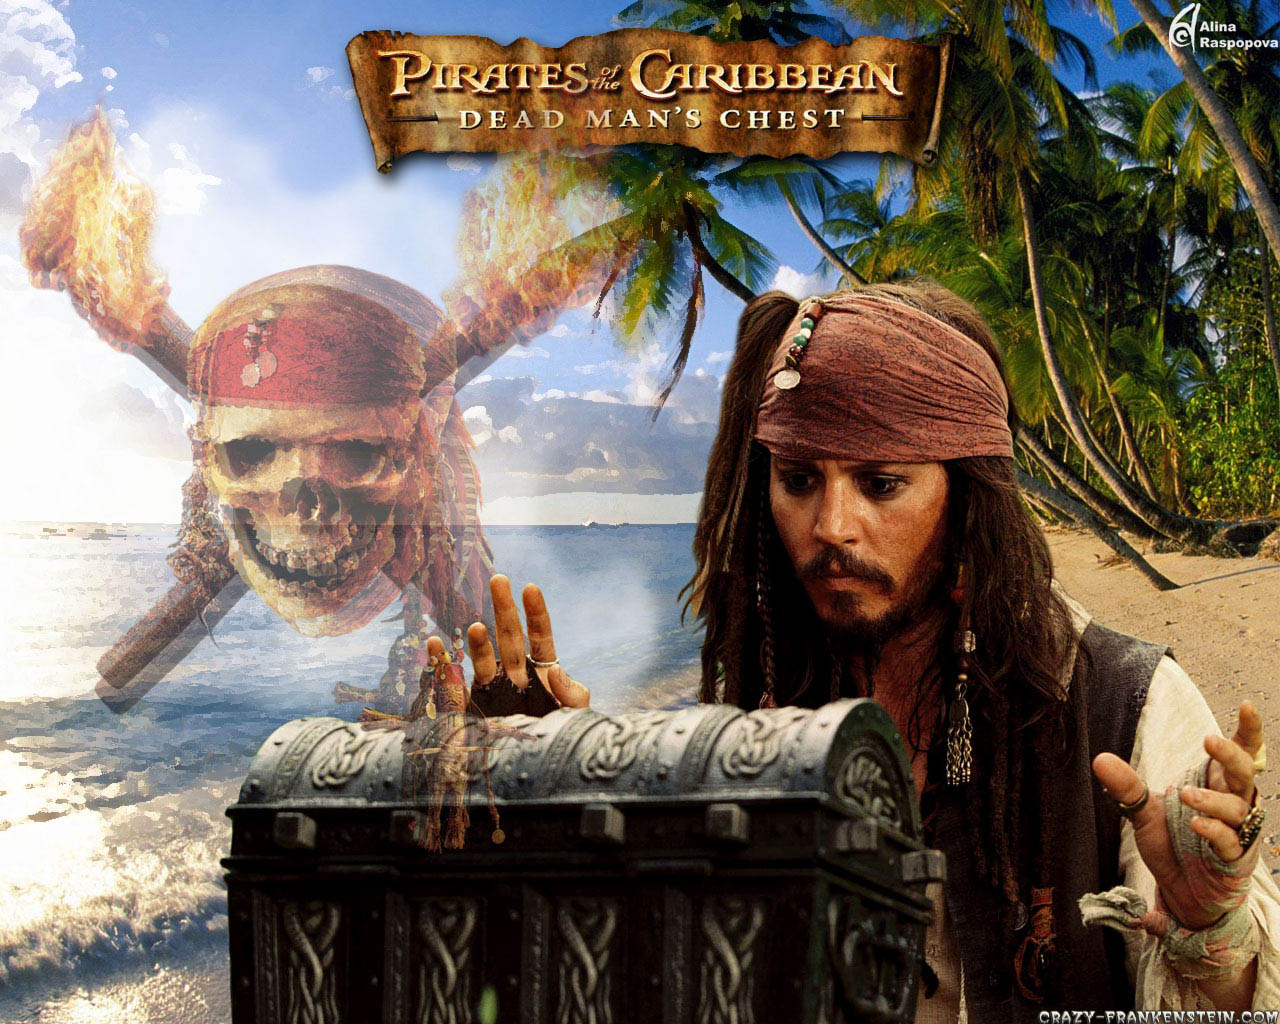 https://blogger.googleusercontent.com/img/b/R29vZ2xl/AVvXsEhFbplnDyPsir3sjJeRGSEvt3LWXSN80TgSyqCzu8u2HzwX7OUiBEp7V9LbHmoHB1BjGbShmWQWdxSNbIzZ1Zf0CBEOYe4fwCe3p8u0Z3icuUXo3SZTAgmc2CDrSkOmJ6smM0hP0aW9SKs/s1600/dead-mans-chest-pirates-of-the-caribbean-wallpaper.jpg